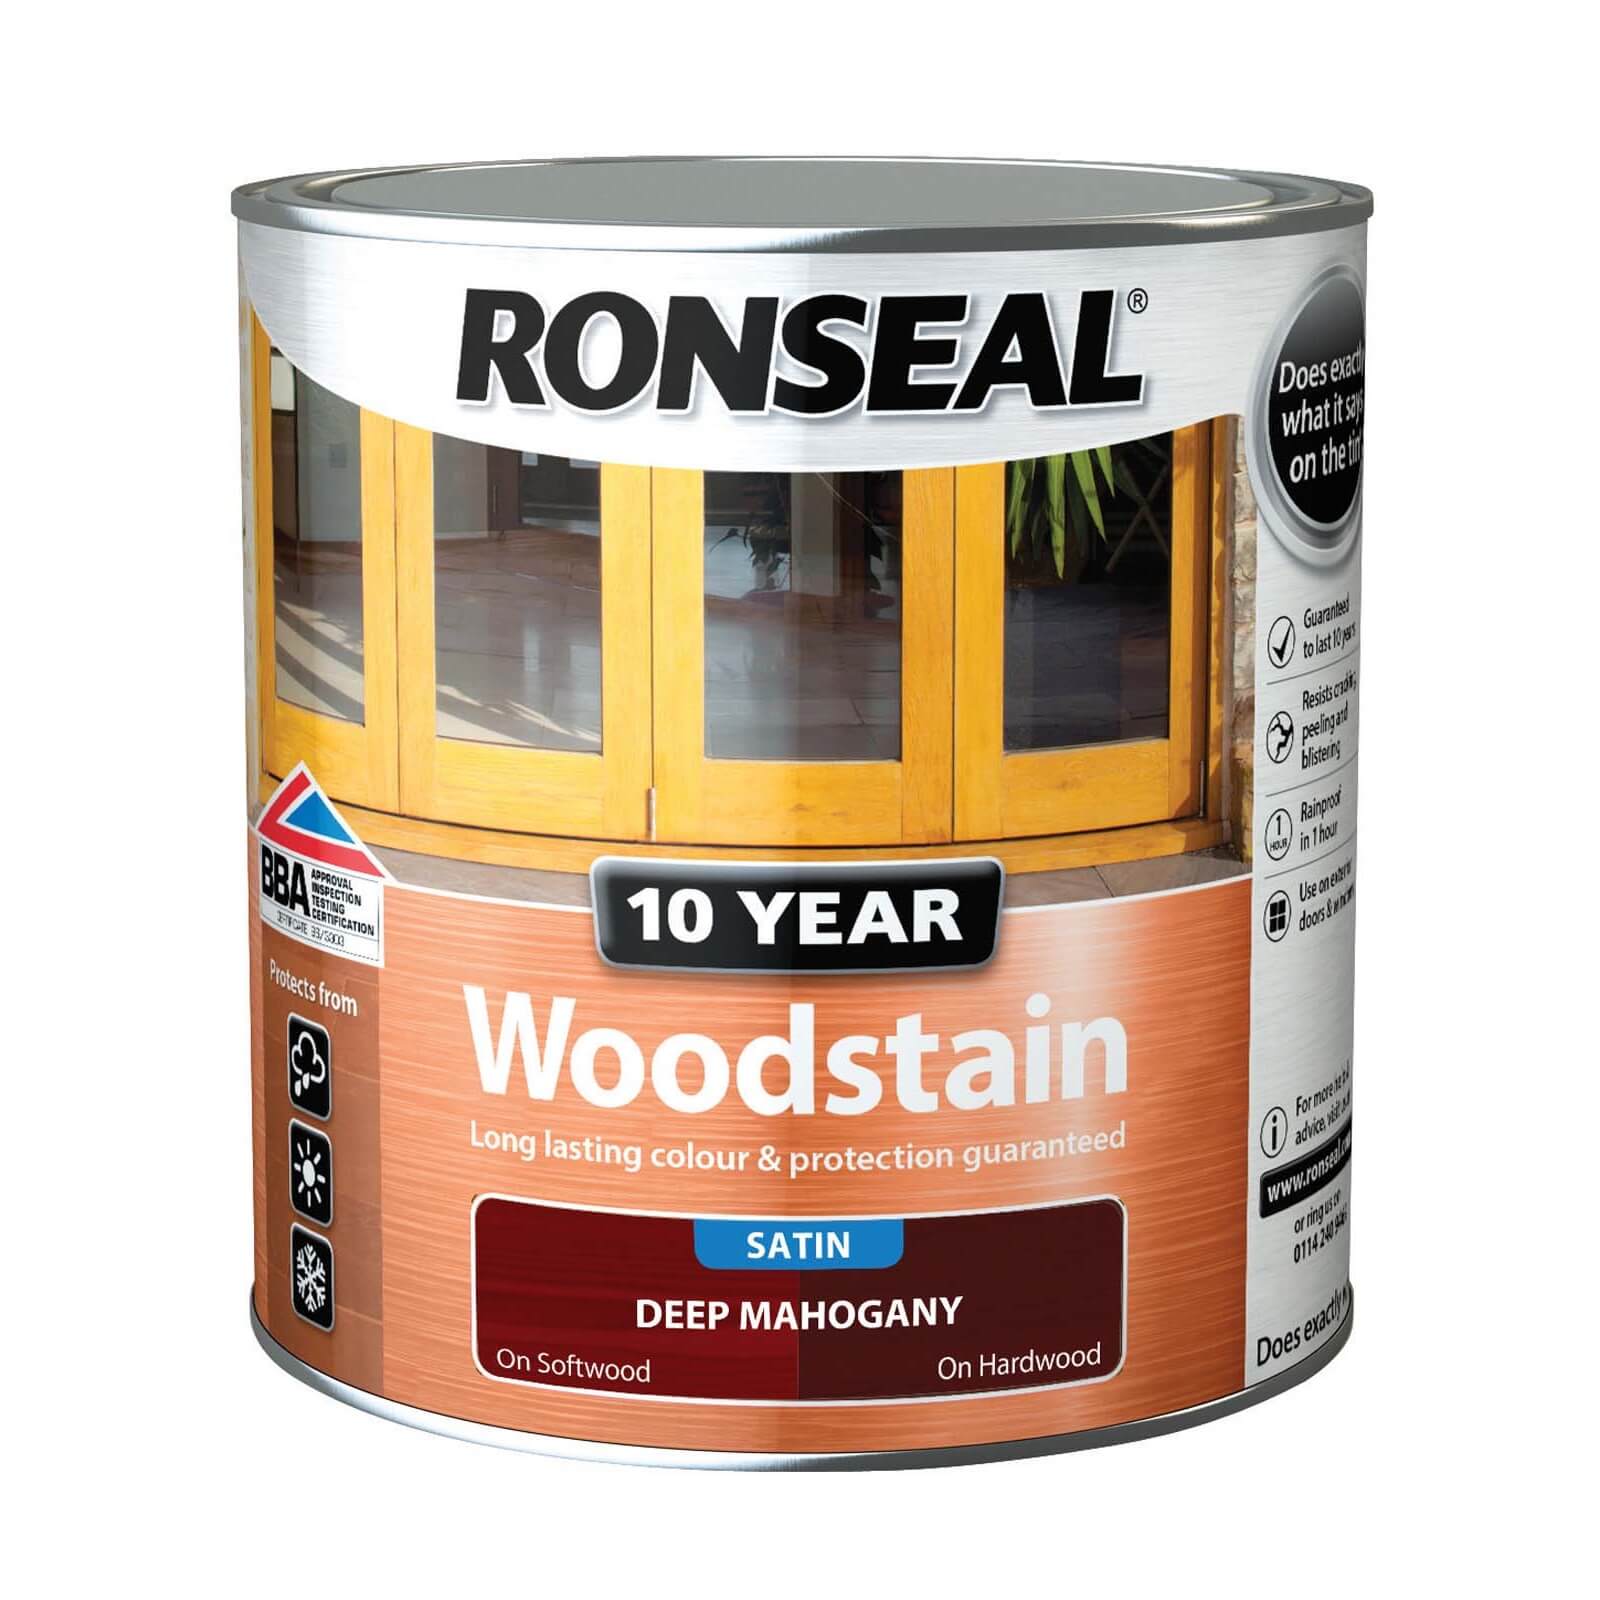 Ronseal 10 Year Woodstain Deep Mahogany Satin -  2.5L